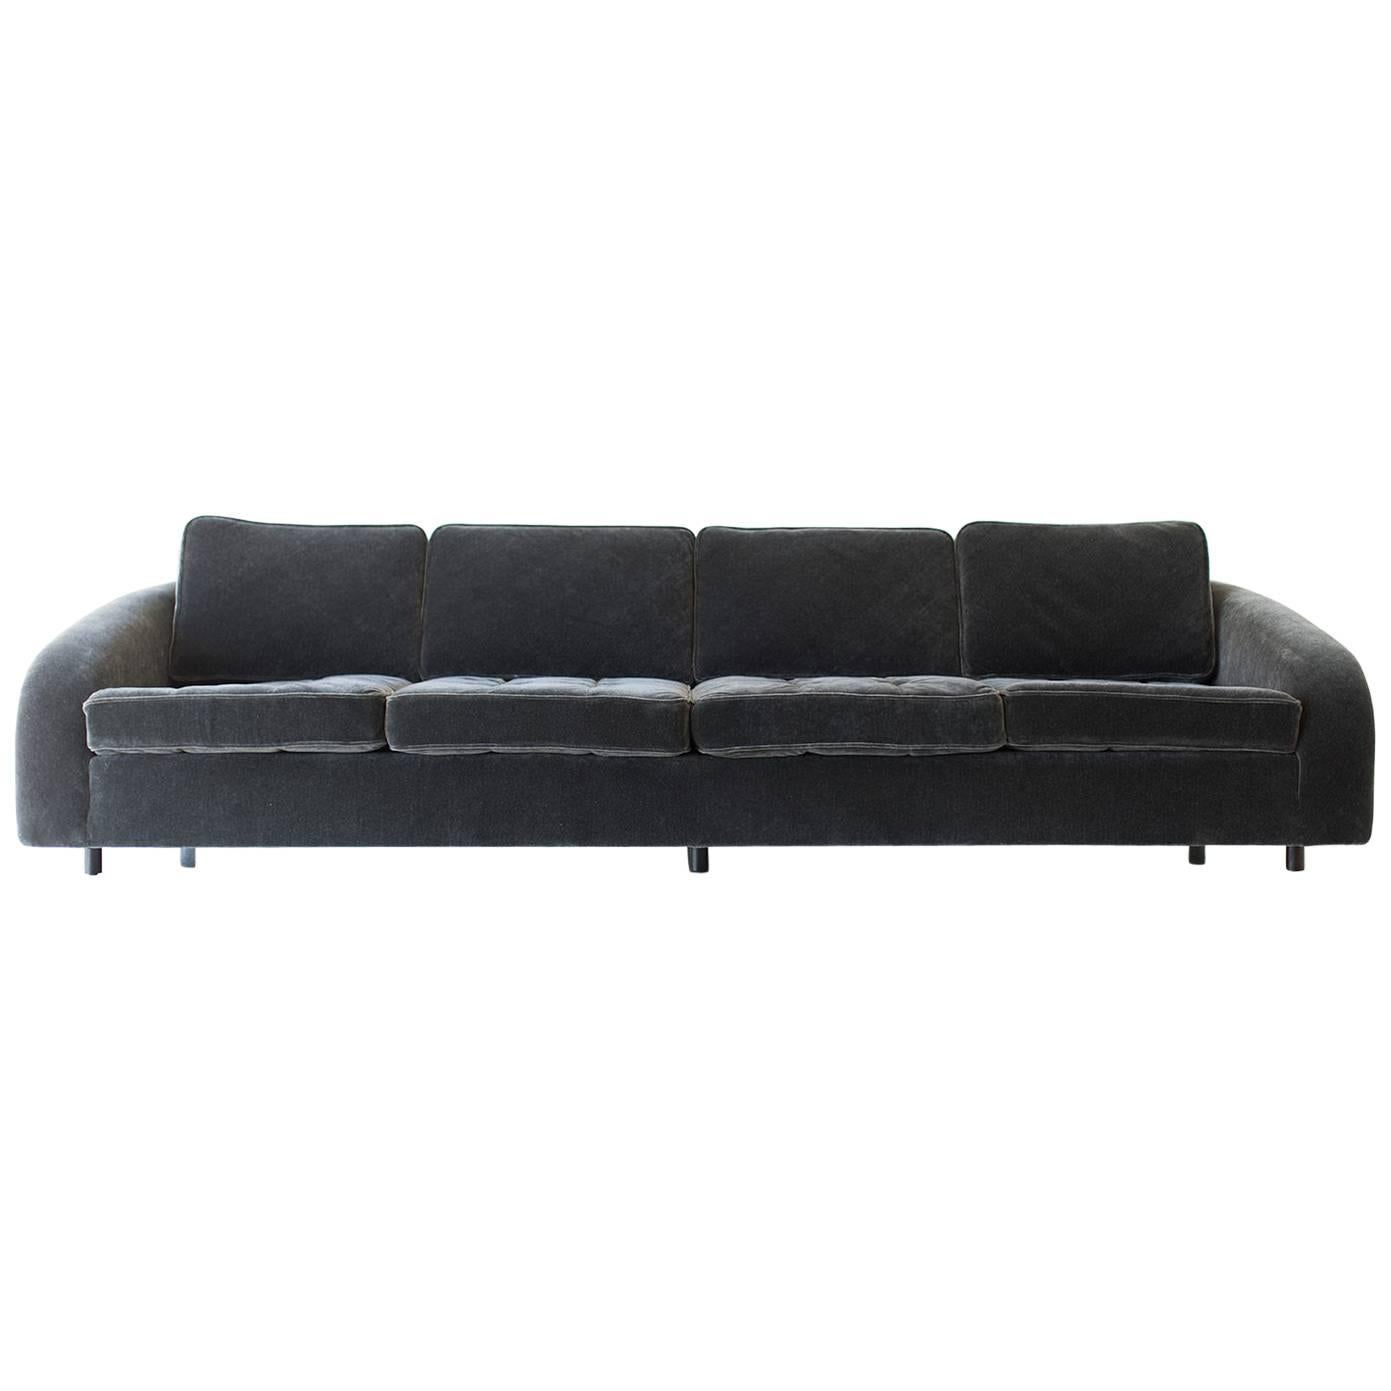 Harvey Probber Mohair Sofa for Harvey Probber Design Inc.